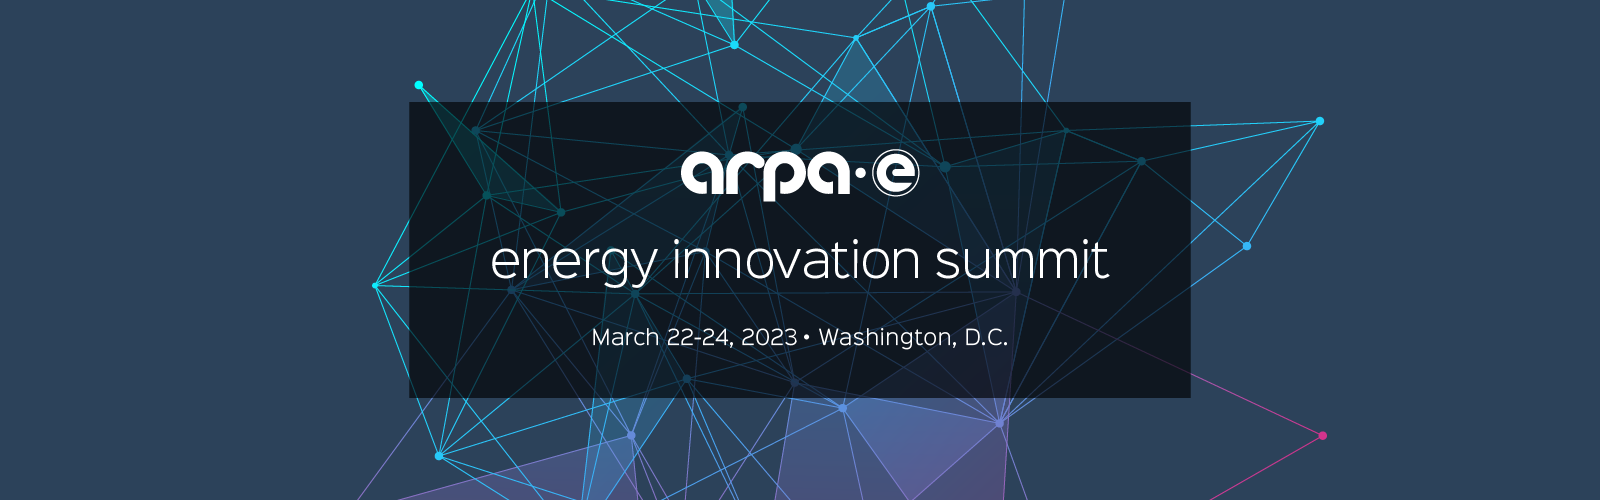 ARPA-E Energy Innovation Summit